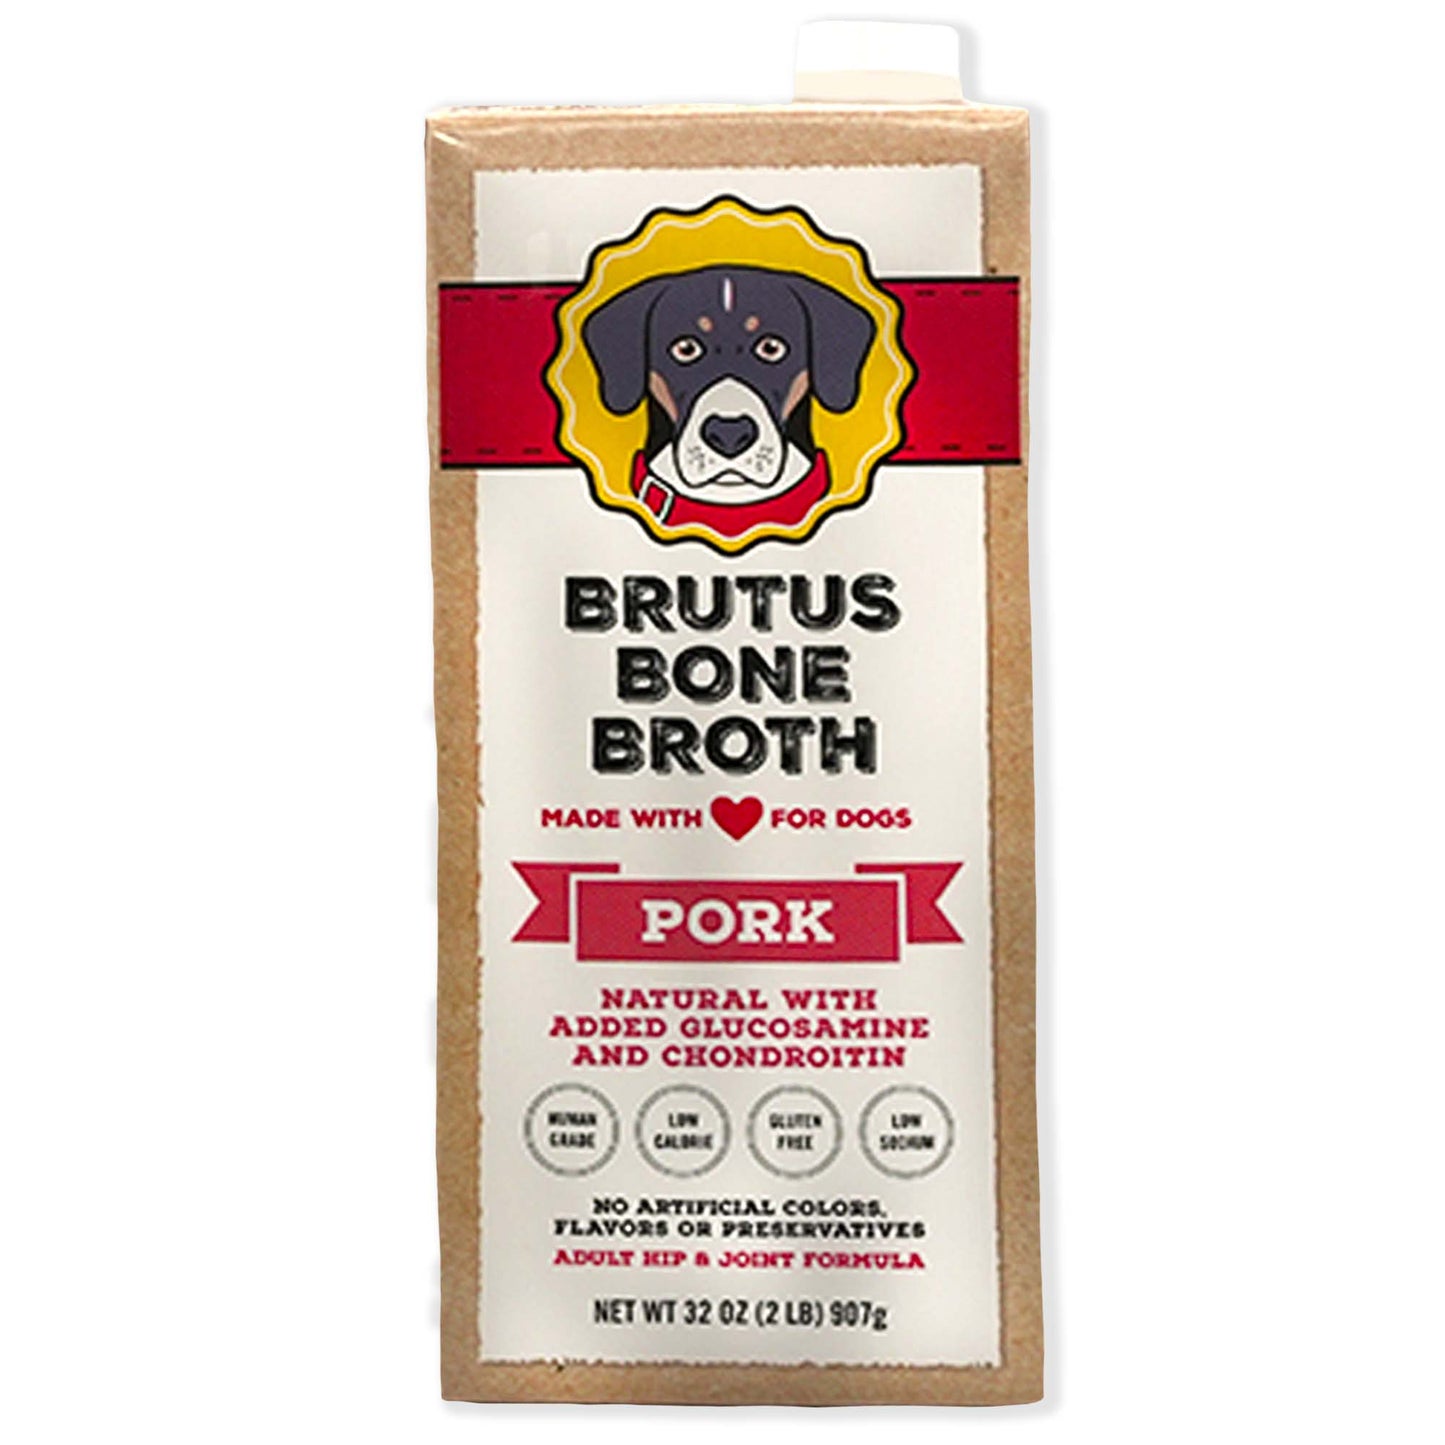 Wholesale Brutus Bone Broth - Pork